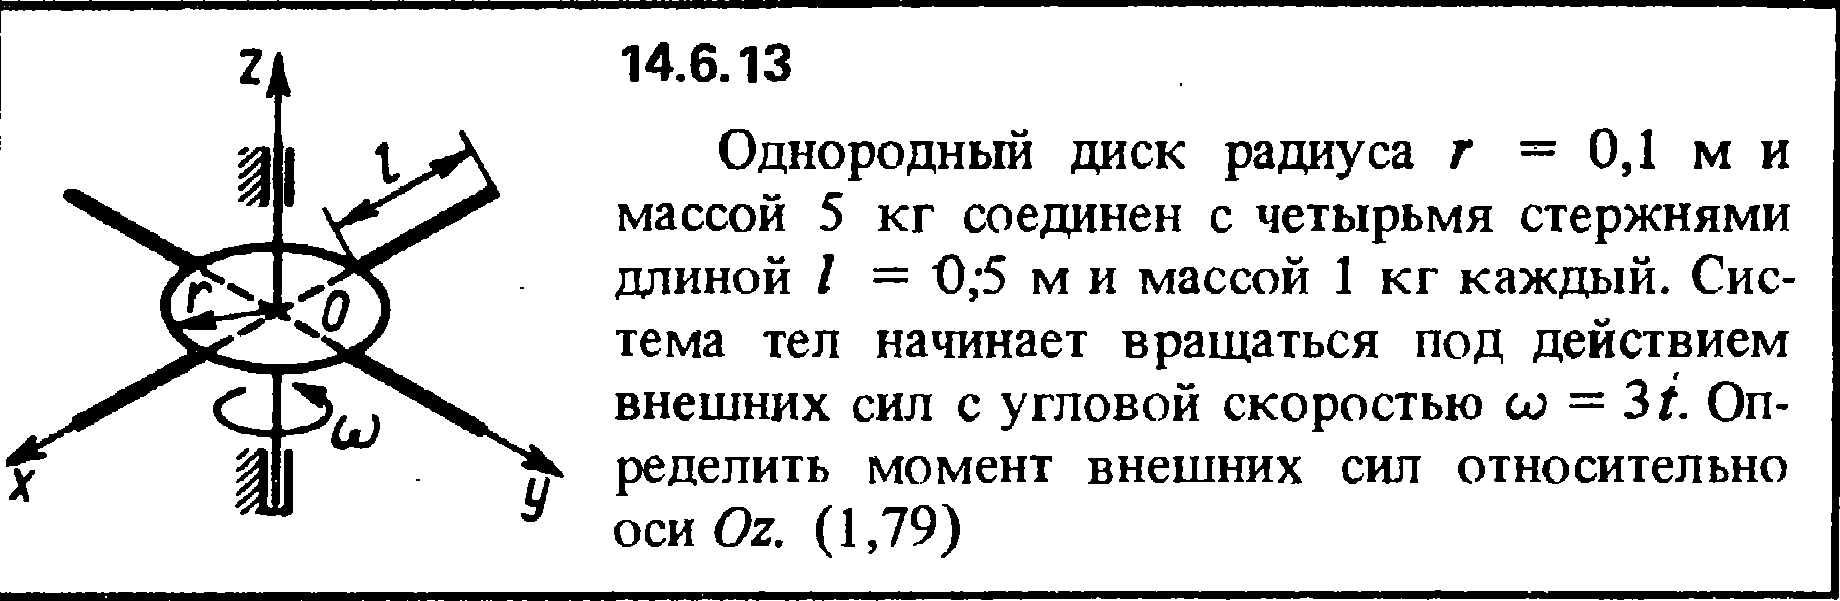 Решение задачи 14.6.13 из сборника Кепе О.Е. 1989 года